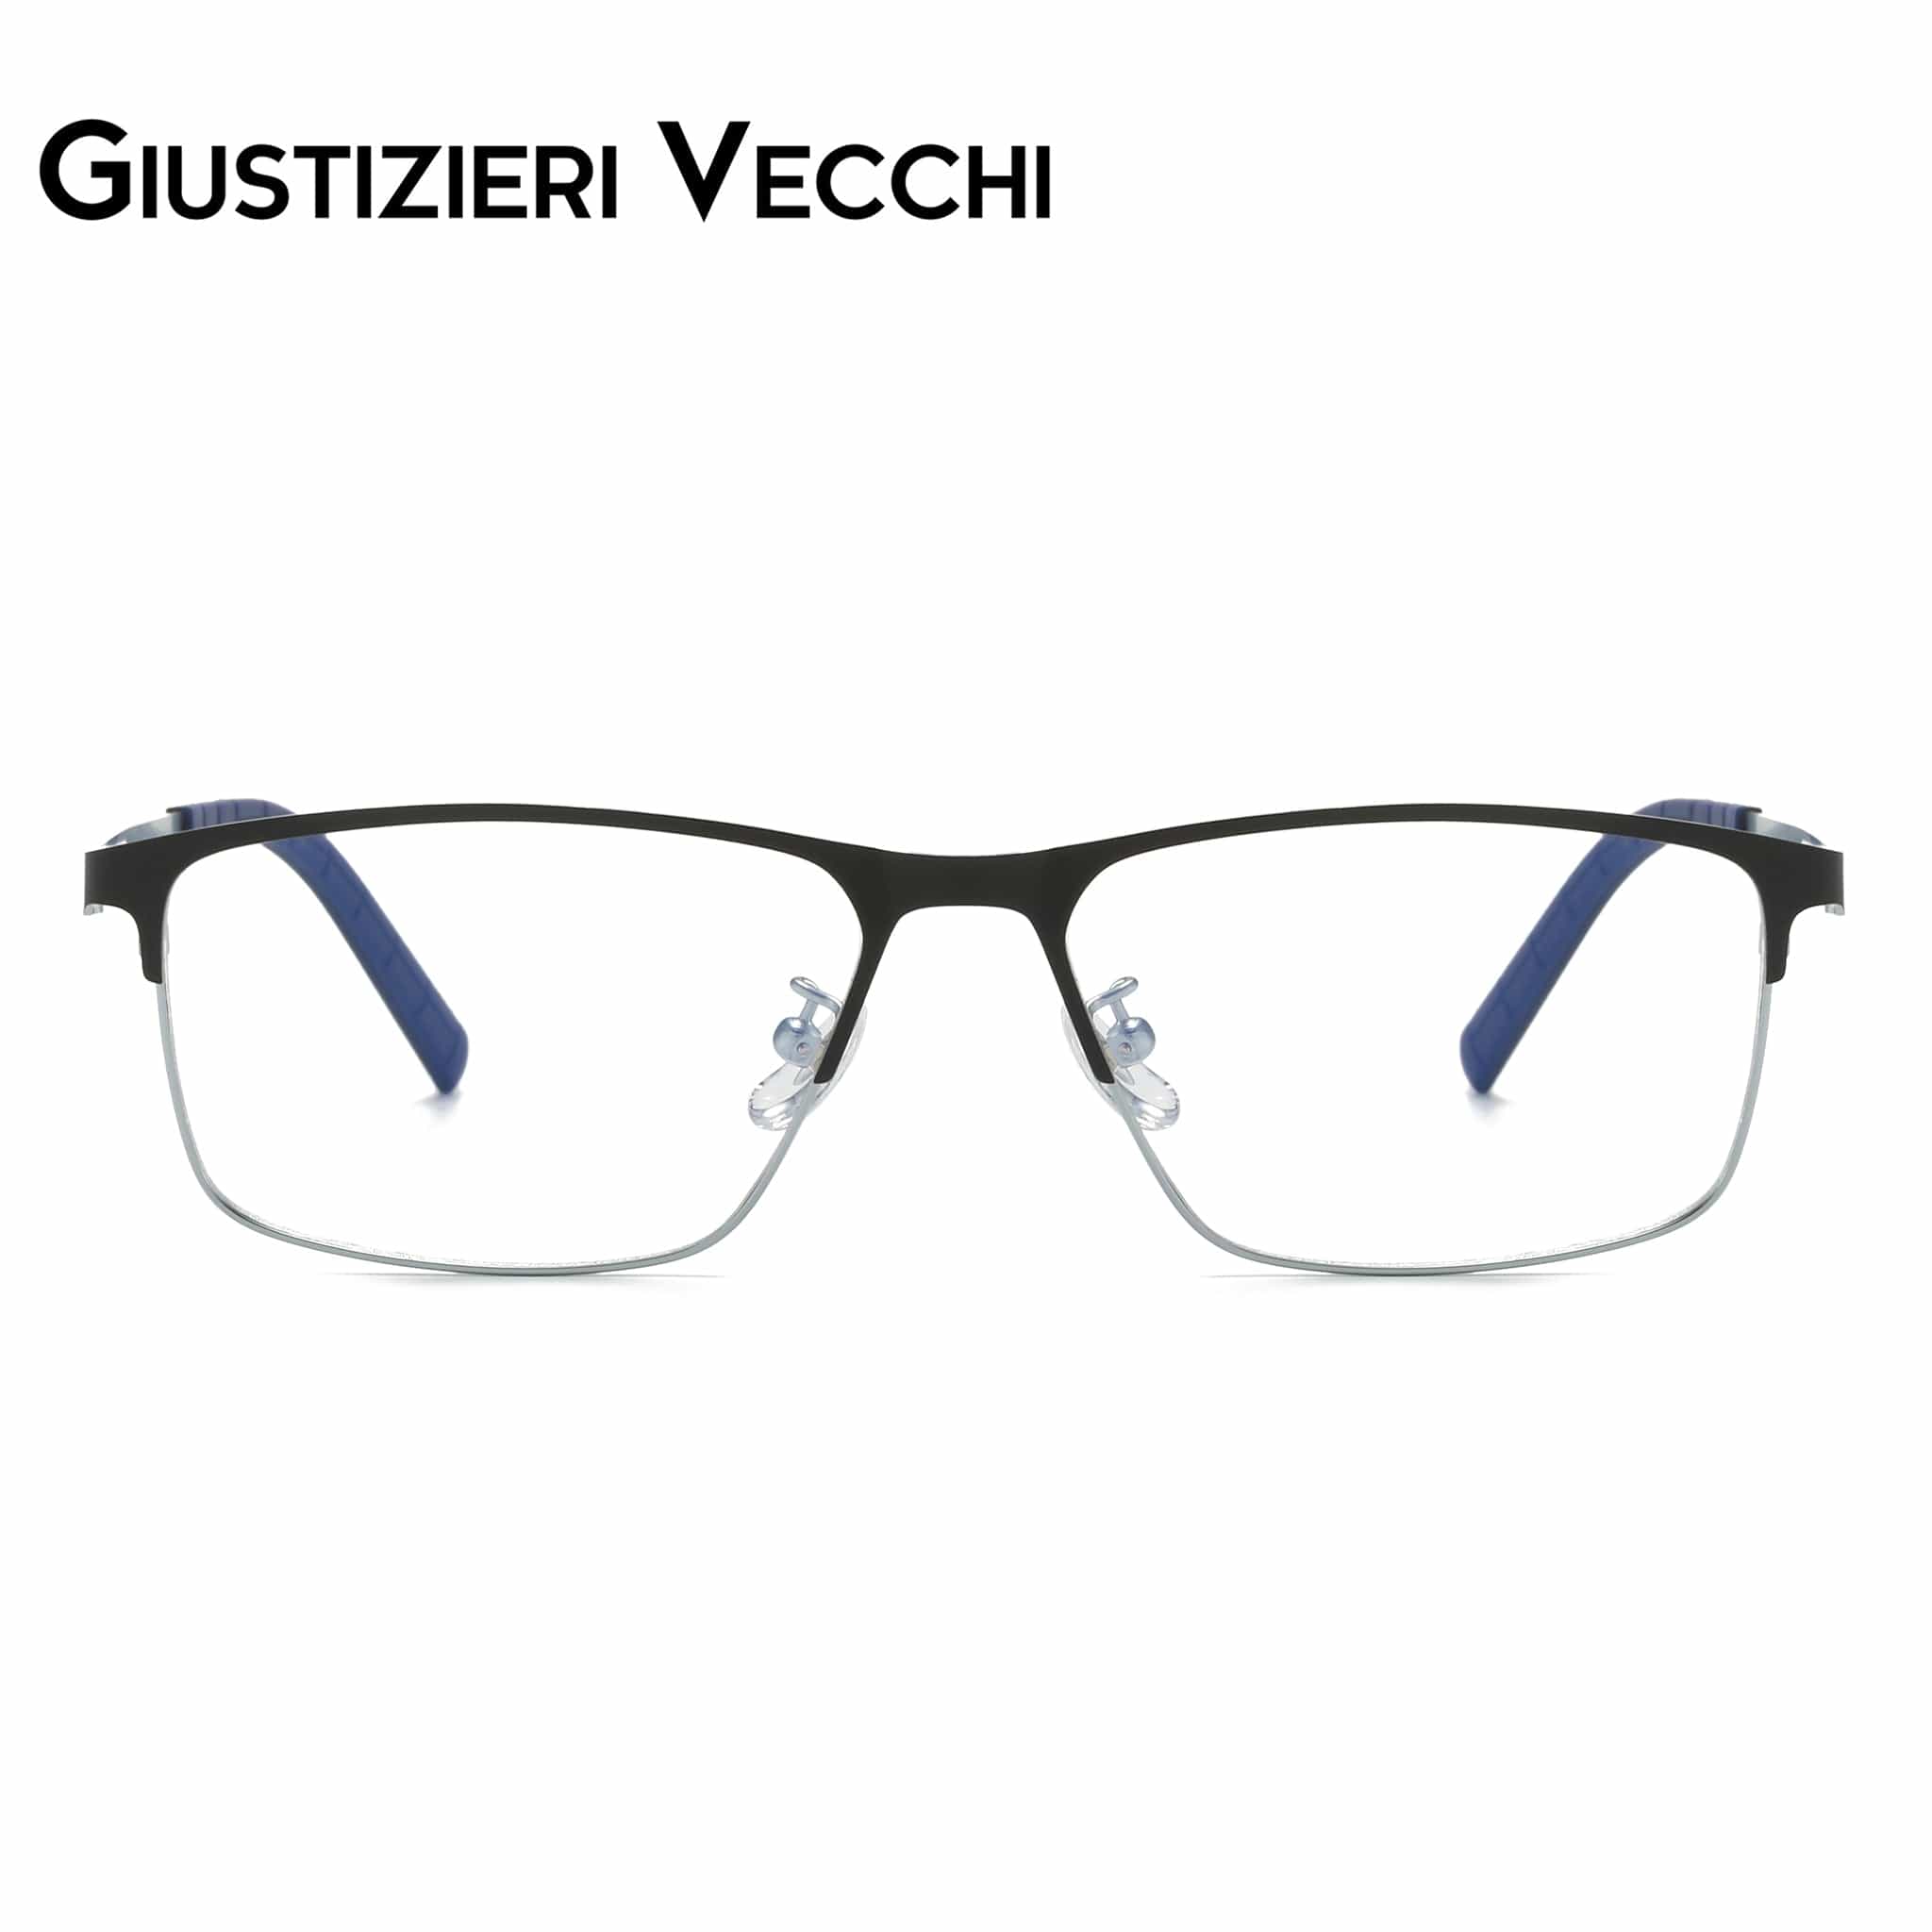 GIUSTIZIERI VECCHI Eyeglasses Large / Black with Blue Sunburst Duo